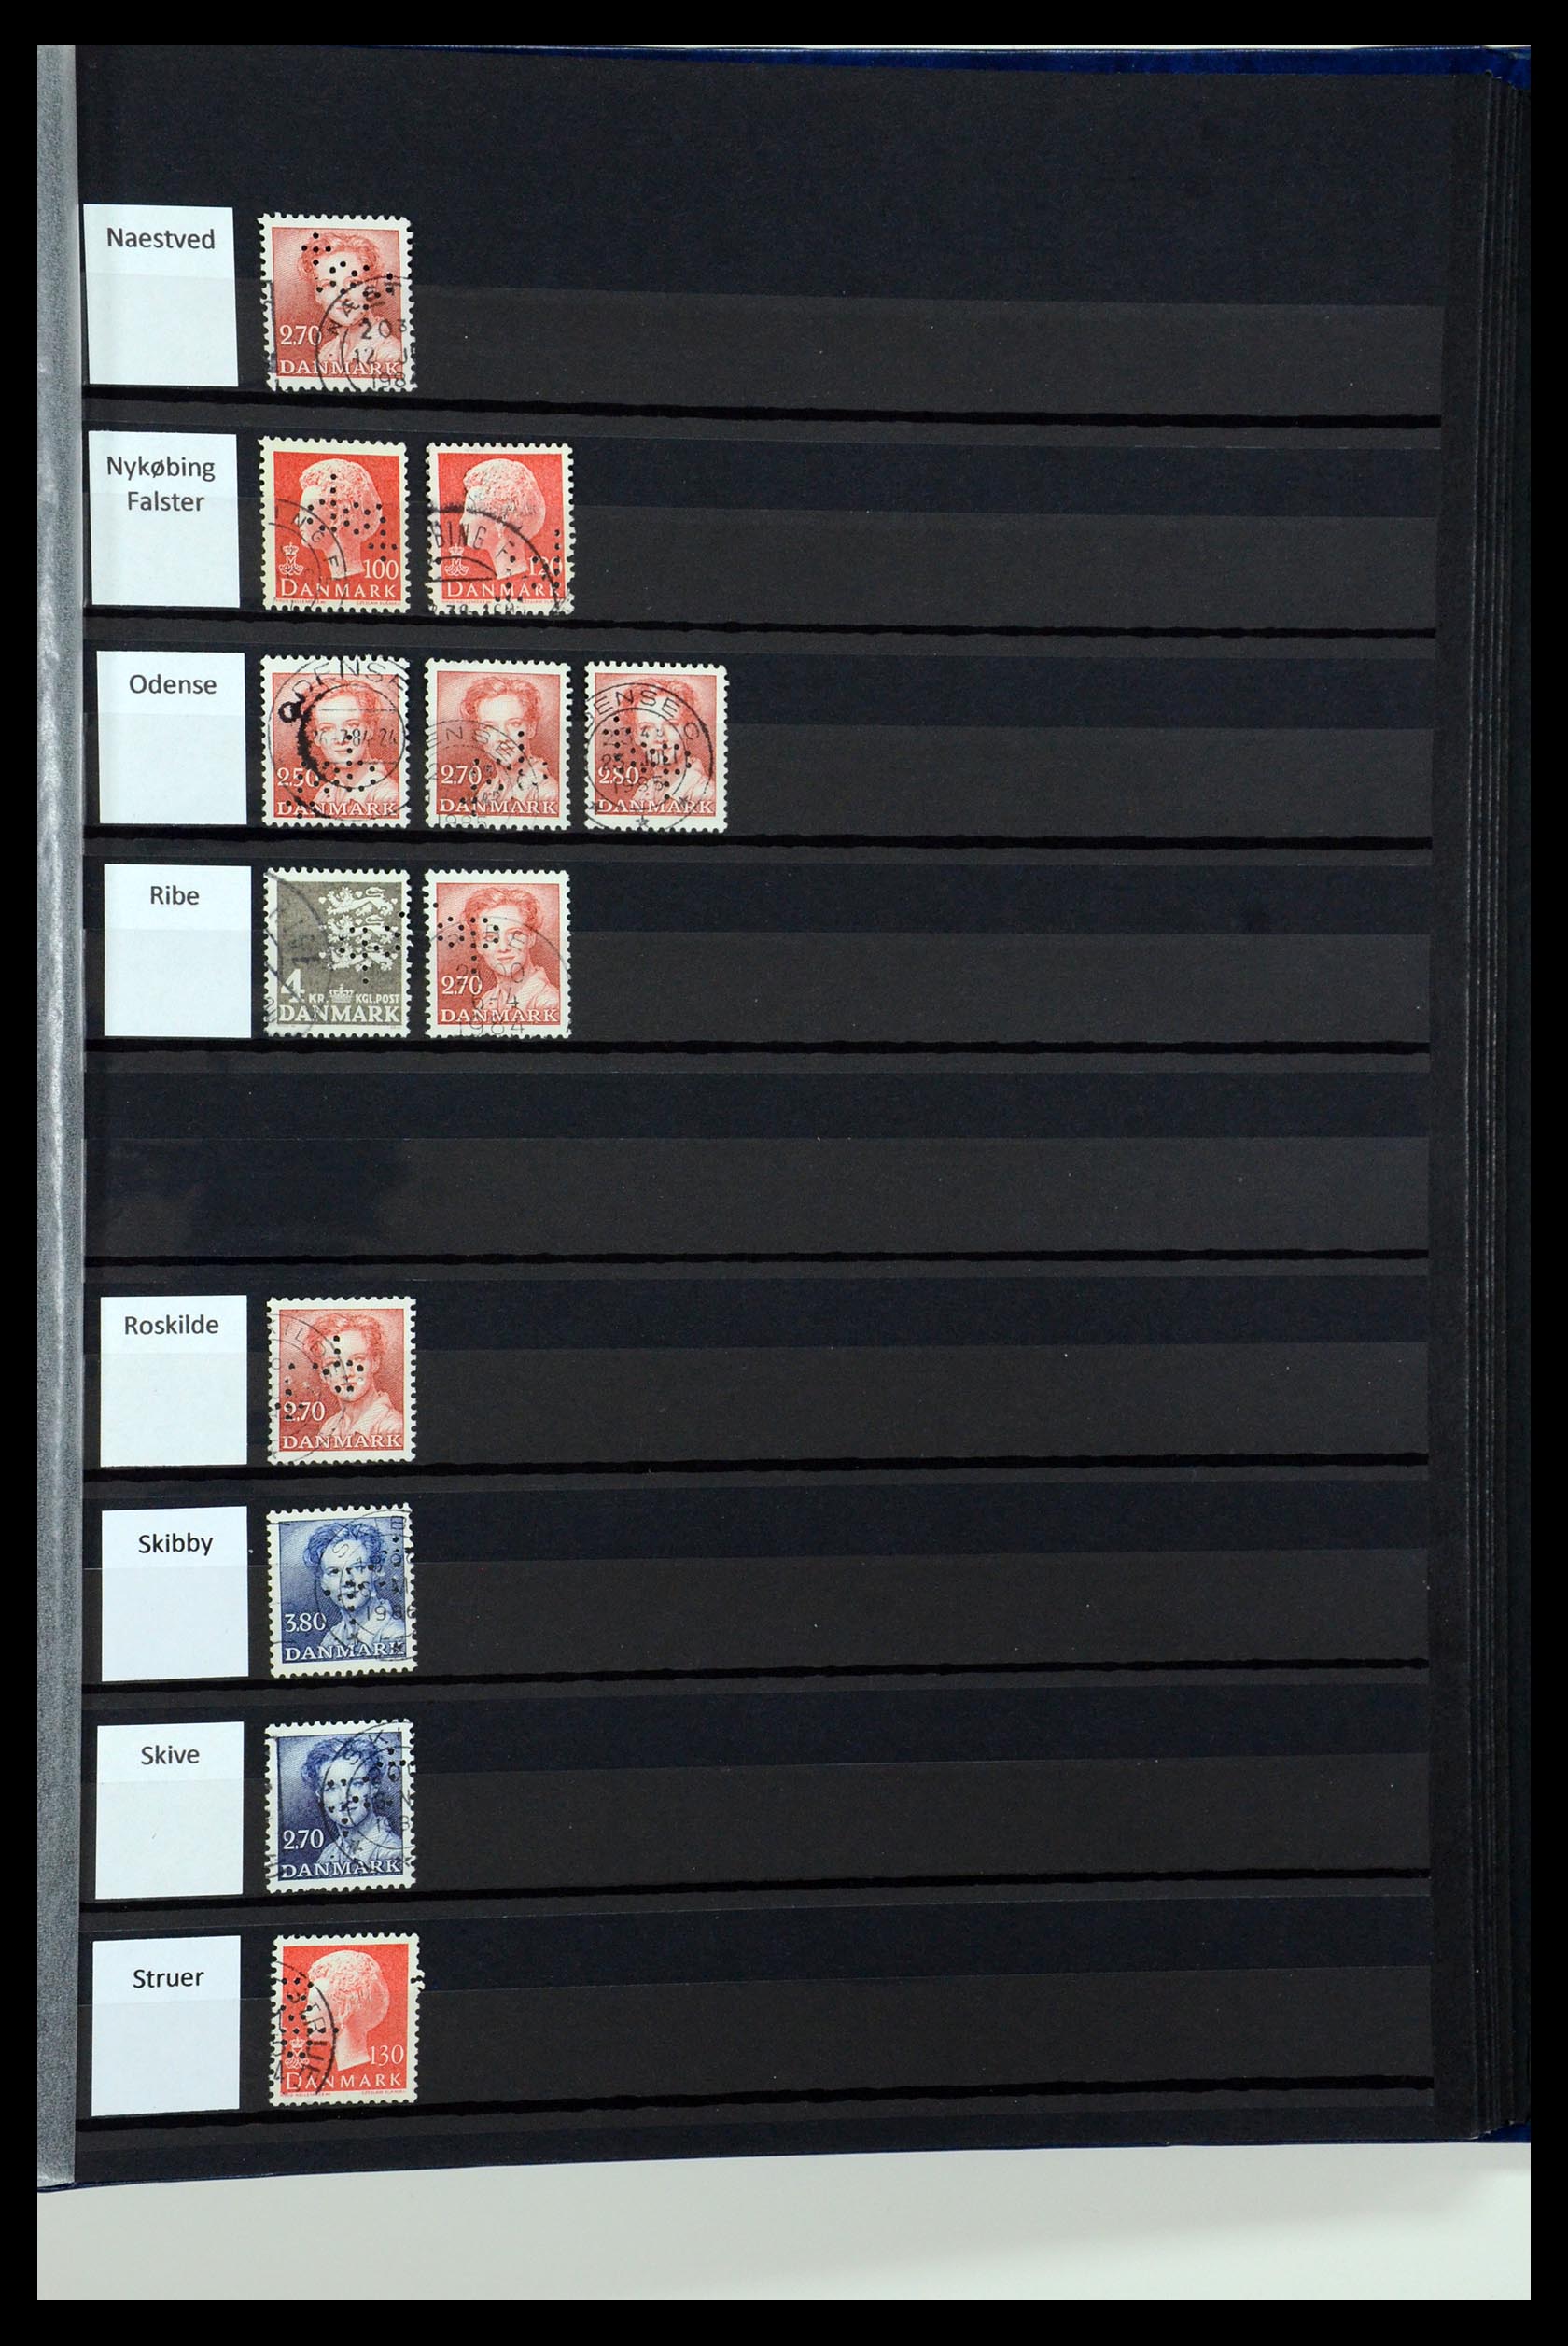 36396 108 - Stamp collection 36396 Denmark perfins.